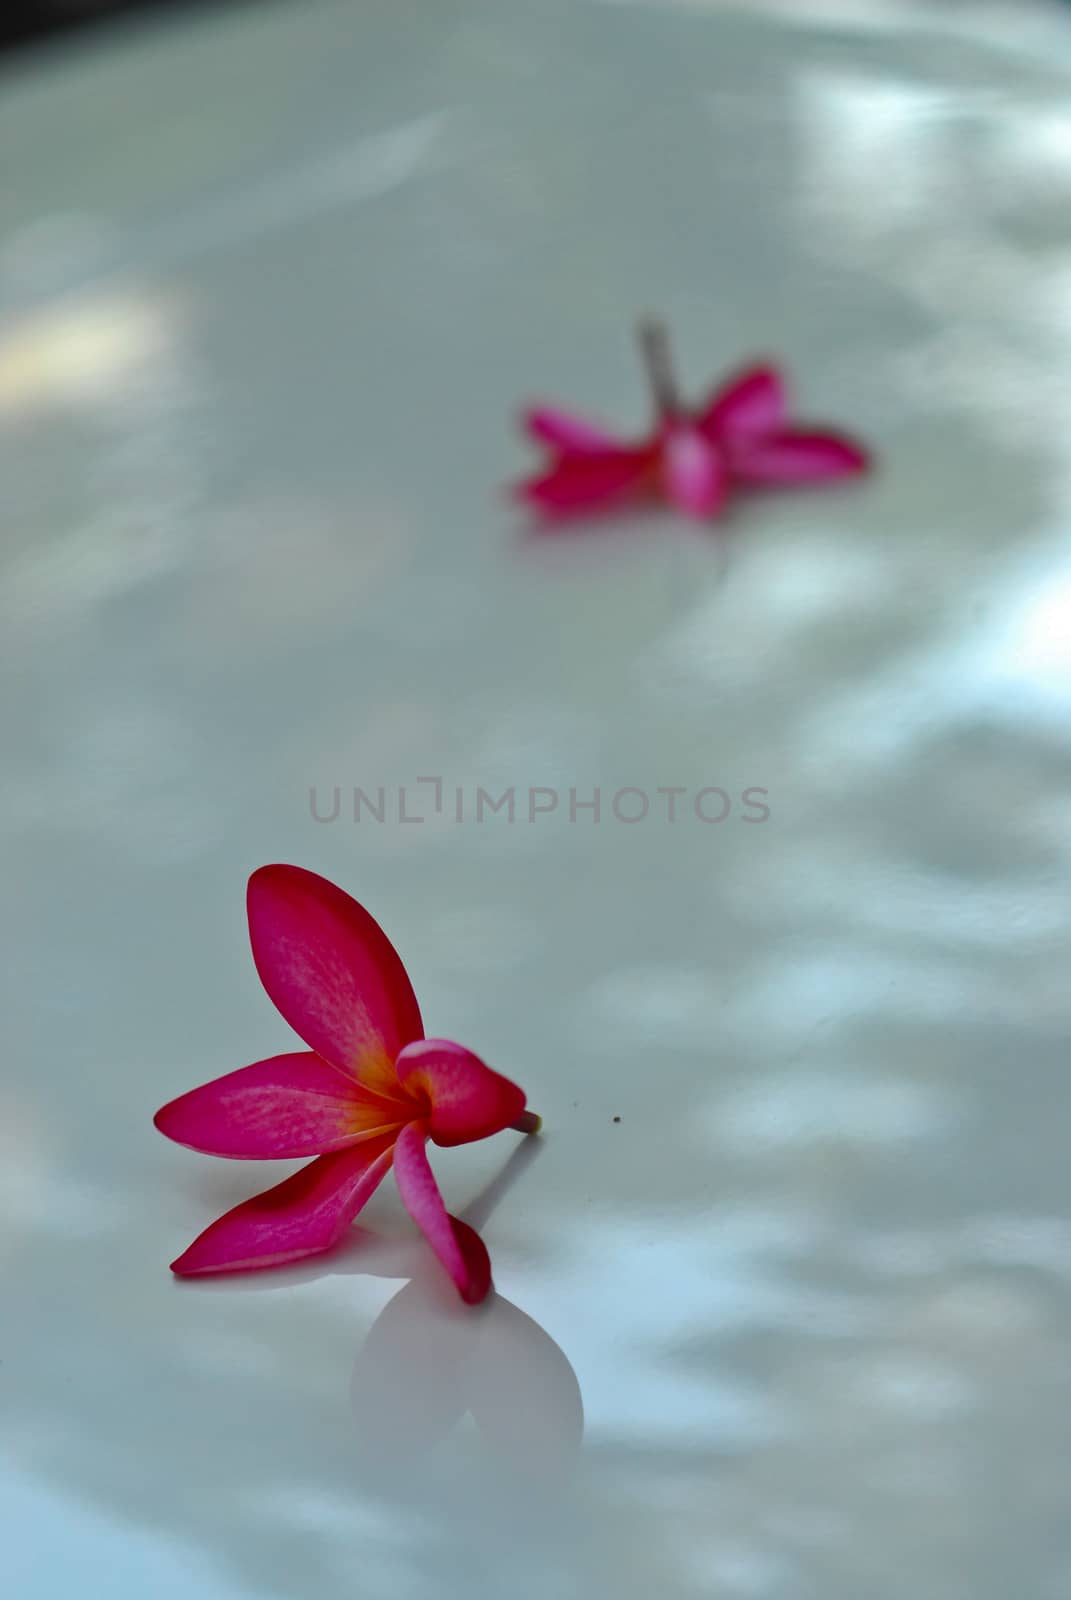 pink binonia flower on radiator bonnet by yotananchankheaw